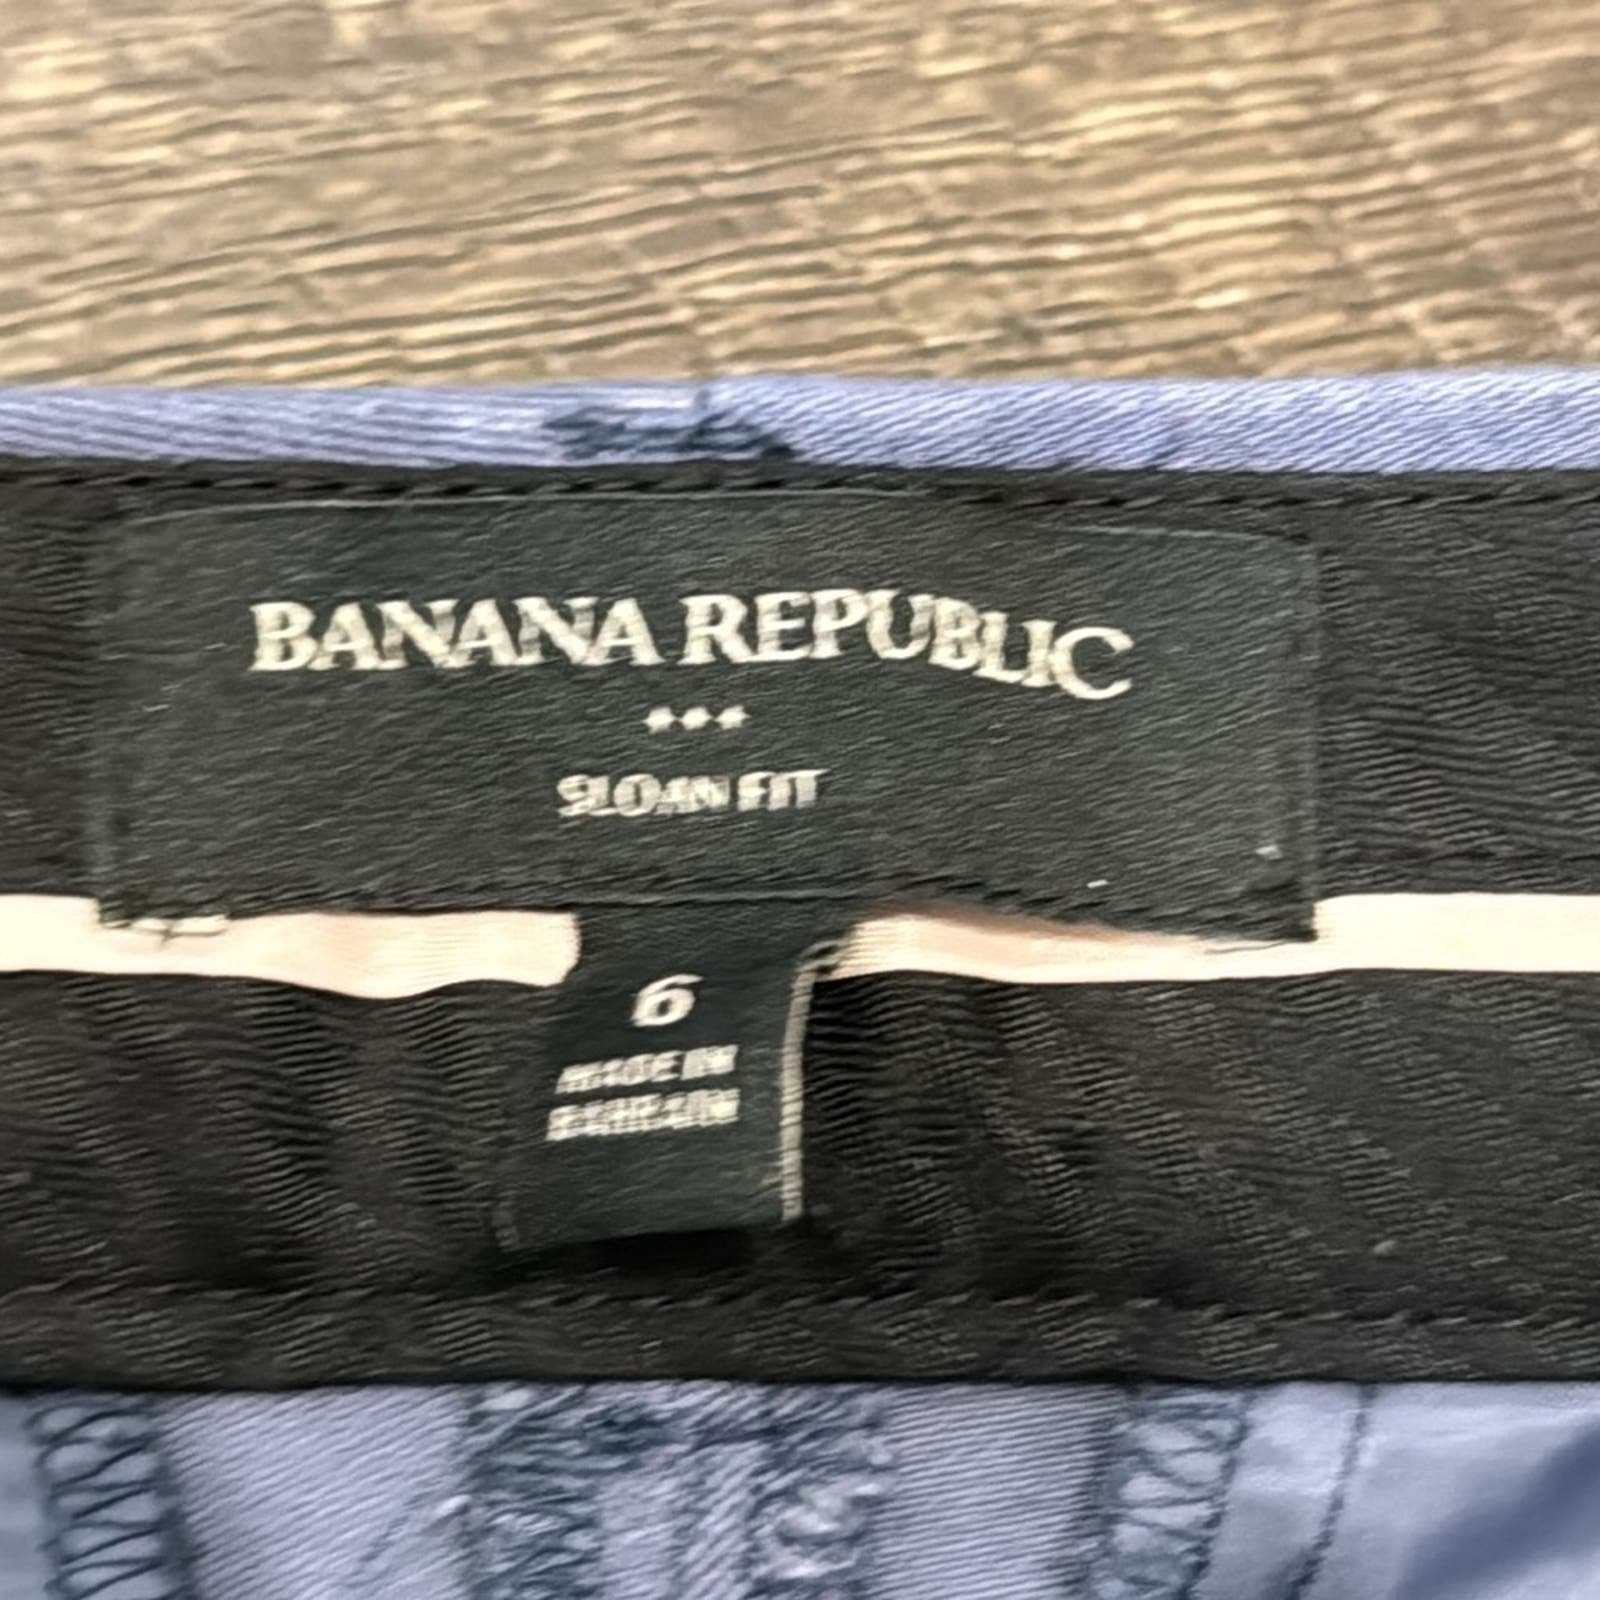 Affordable Banana Republic Women´s Sloan Fit Slim Trouser Pants Periwinkle Size 6 KUub5tZMR best sale